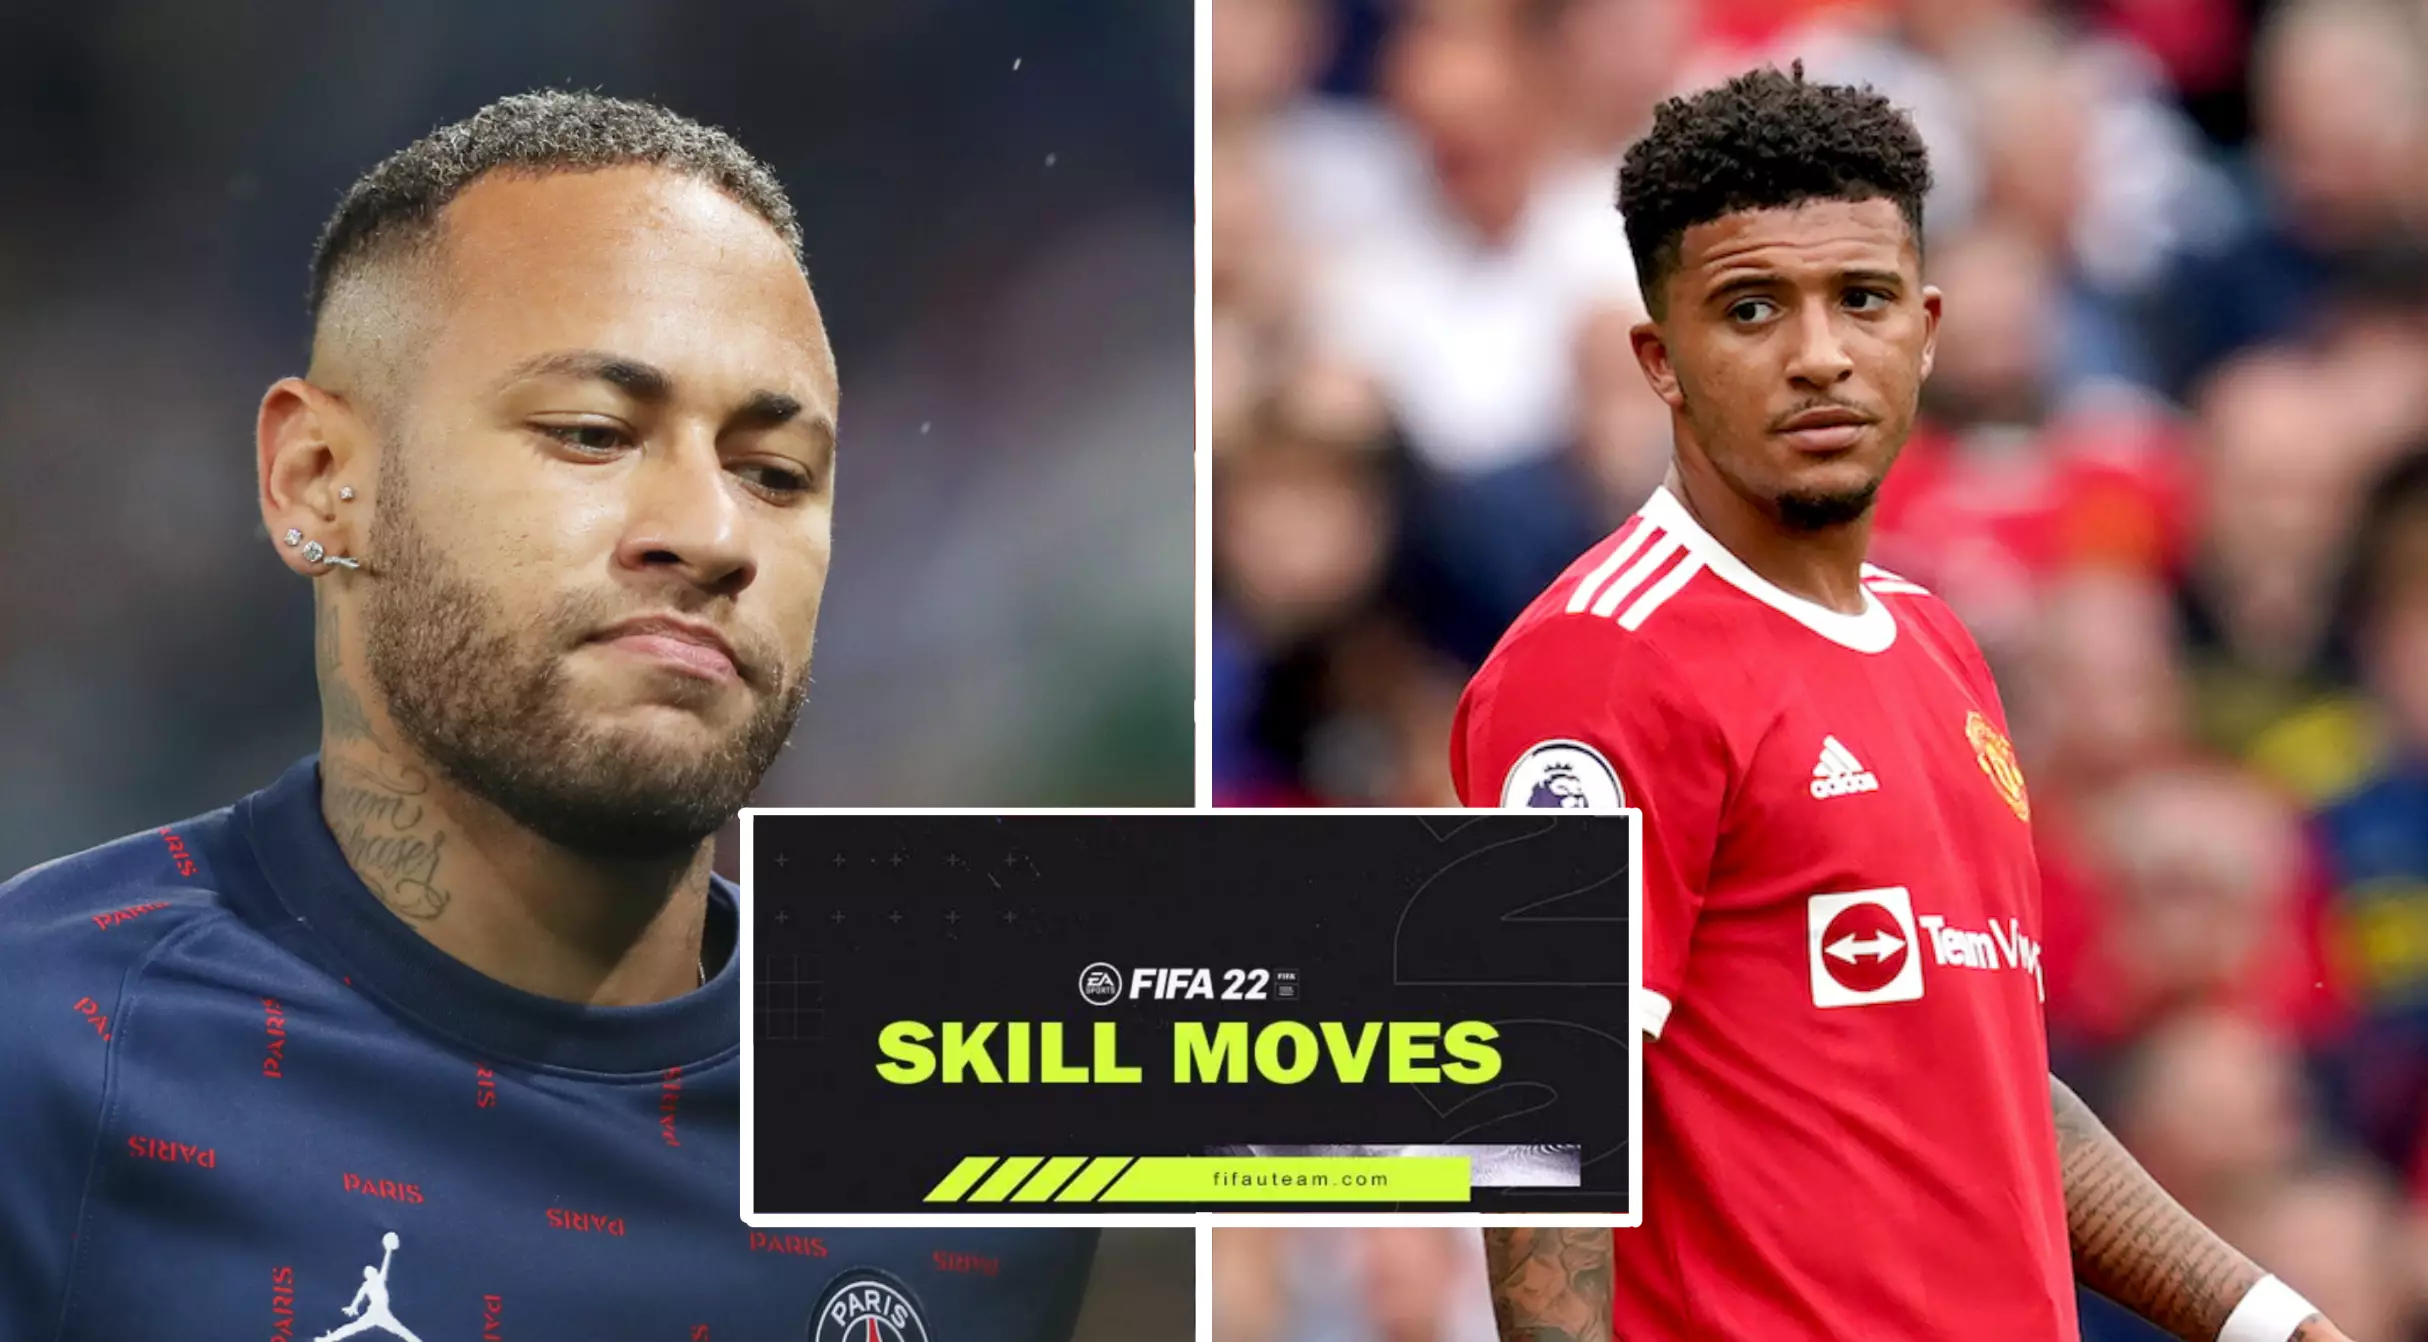 EA Reveals Both Ronaldo And Neymar Make Five-Star Skills List On FIFA 22